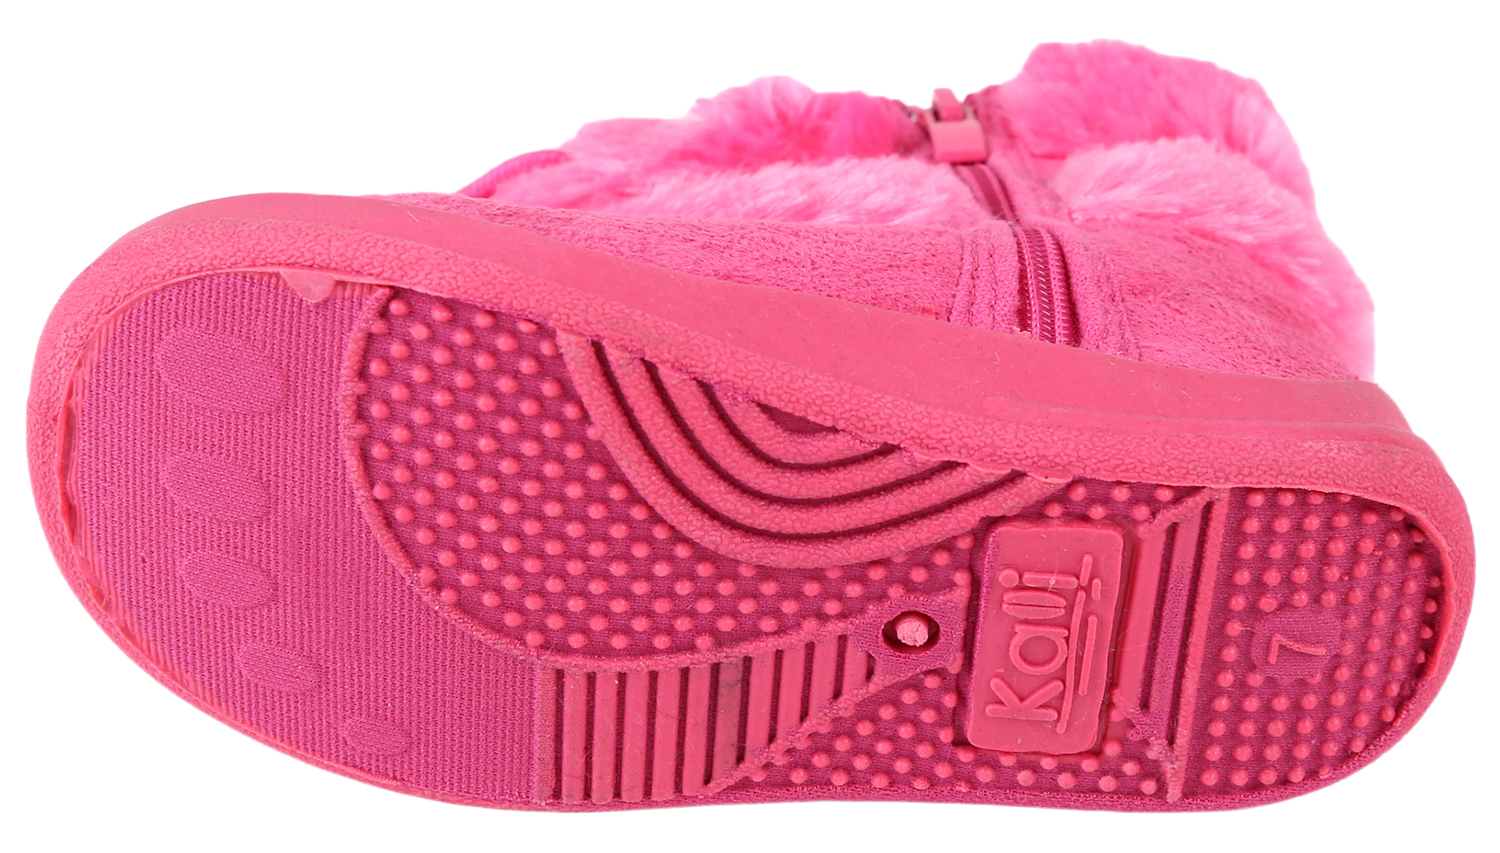 Kali Footwear Girl's Zello Boots for Toddler Girls | Glitter Boots | Pom Pom | Hot Pink 9 Toddler - image 5 of 5